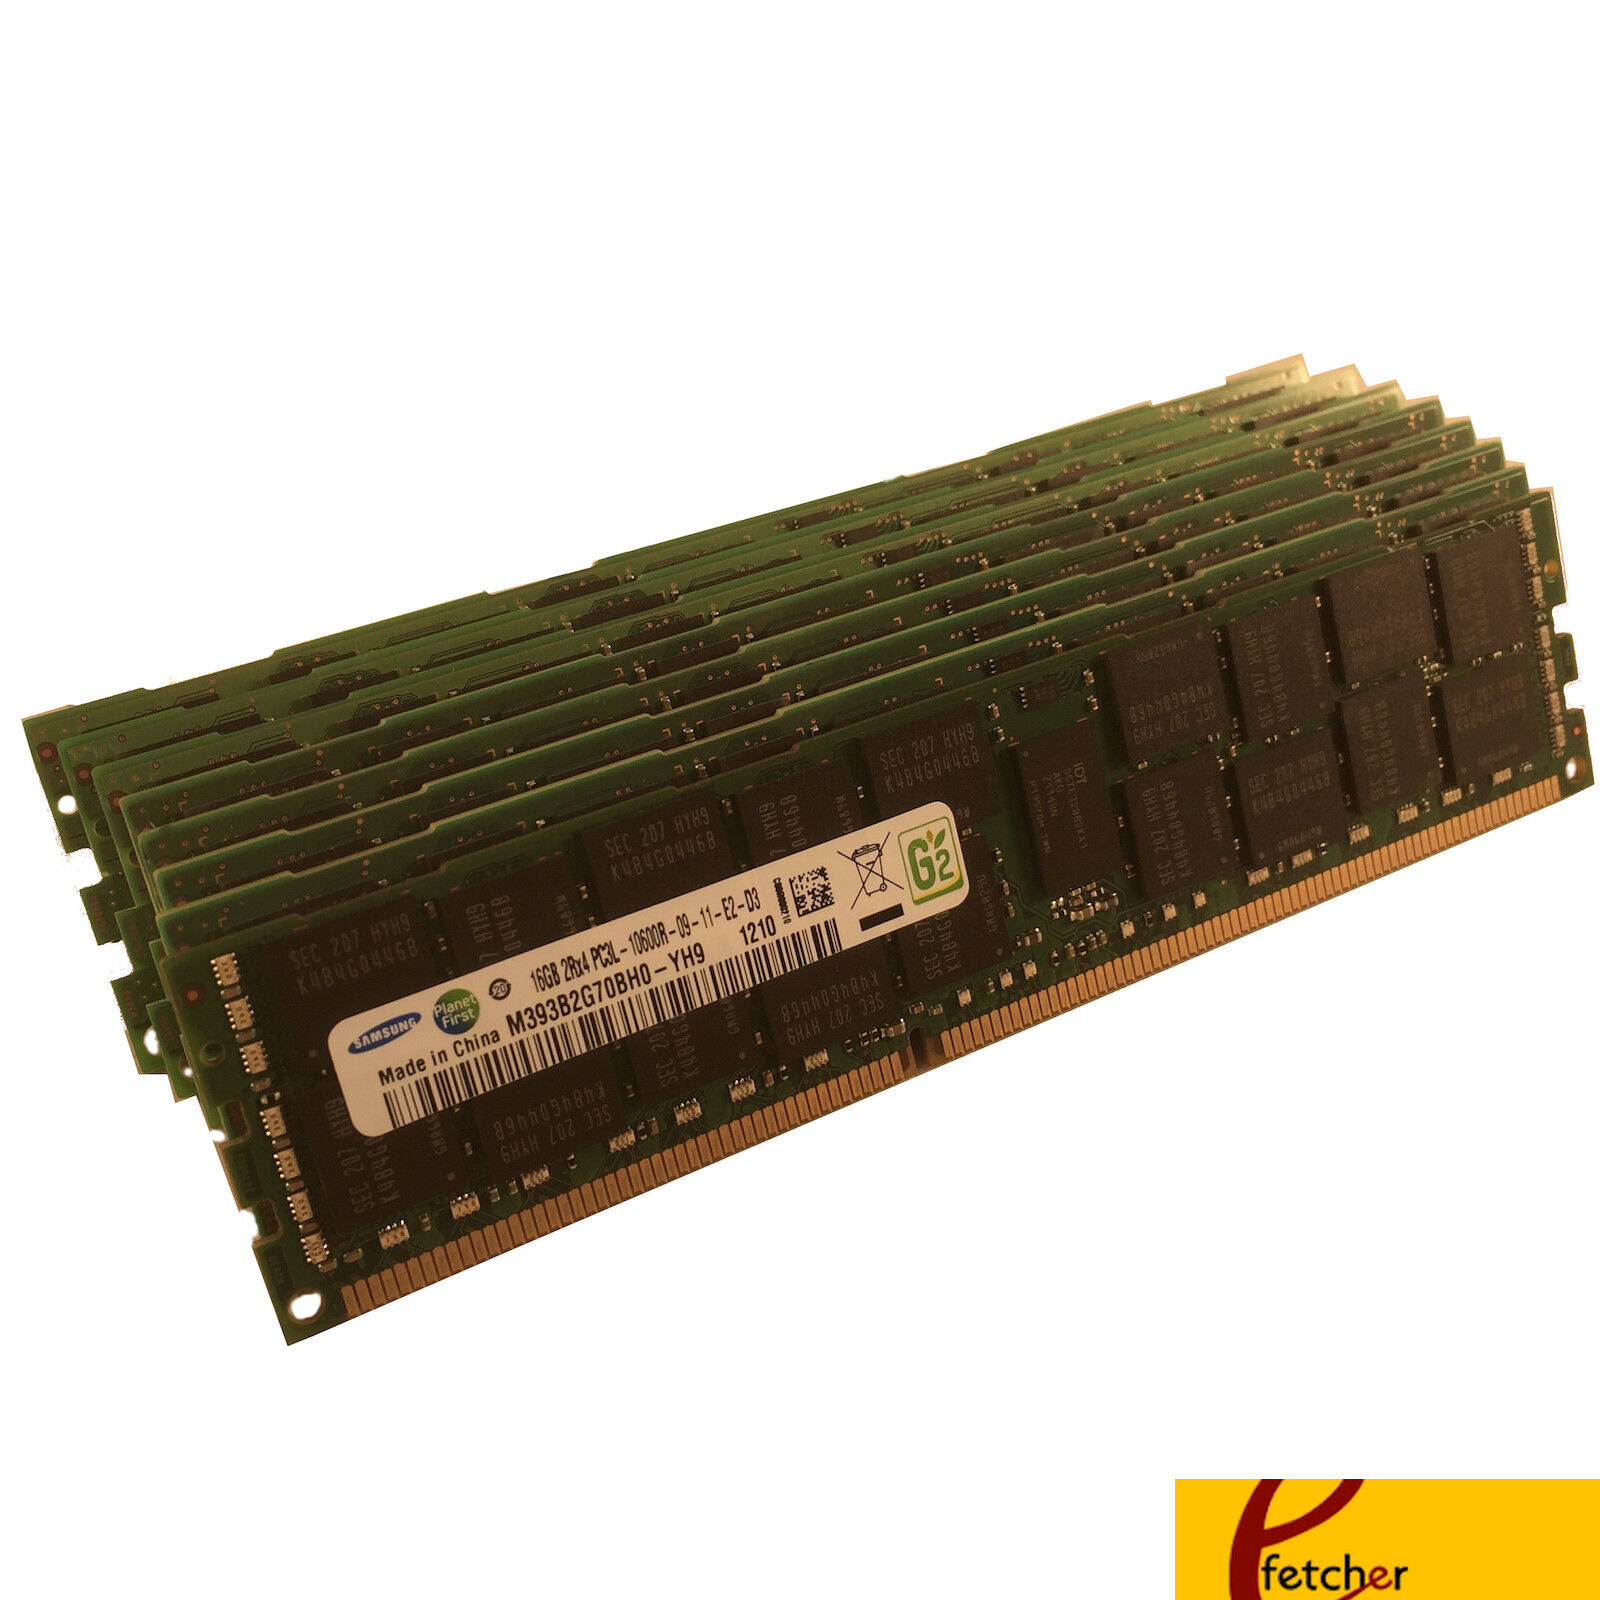 192GB (12 x 16GB) PC3-10600R DDR3 1333 Server Memory RAM HP ProLiant DL380 G7